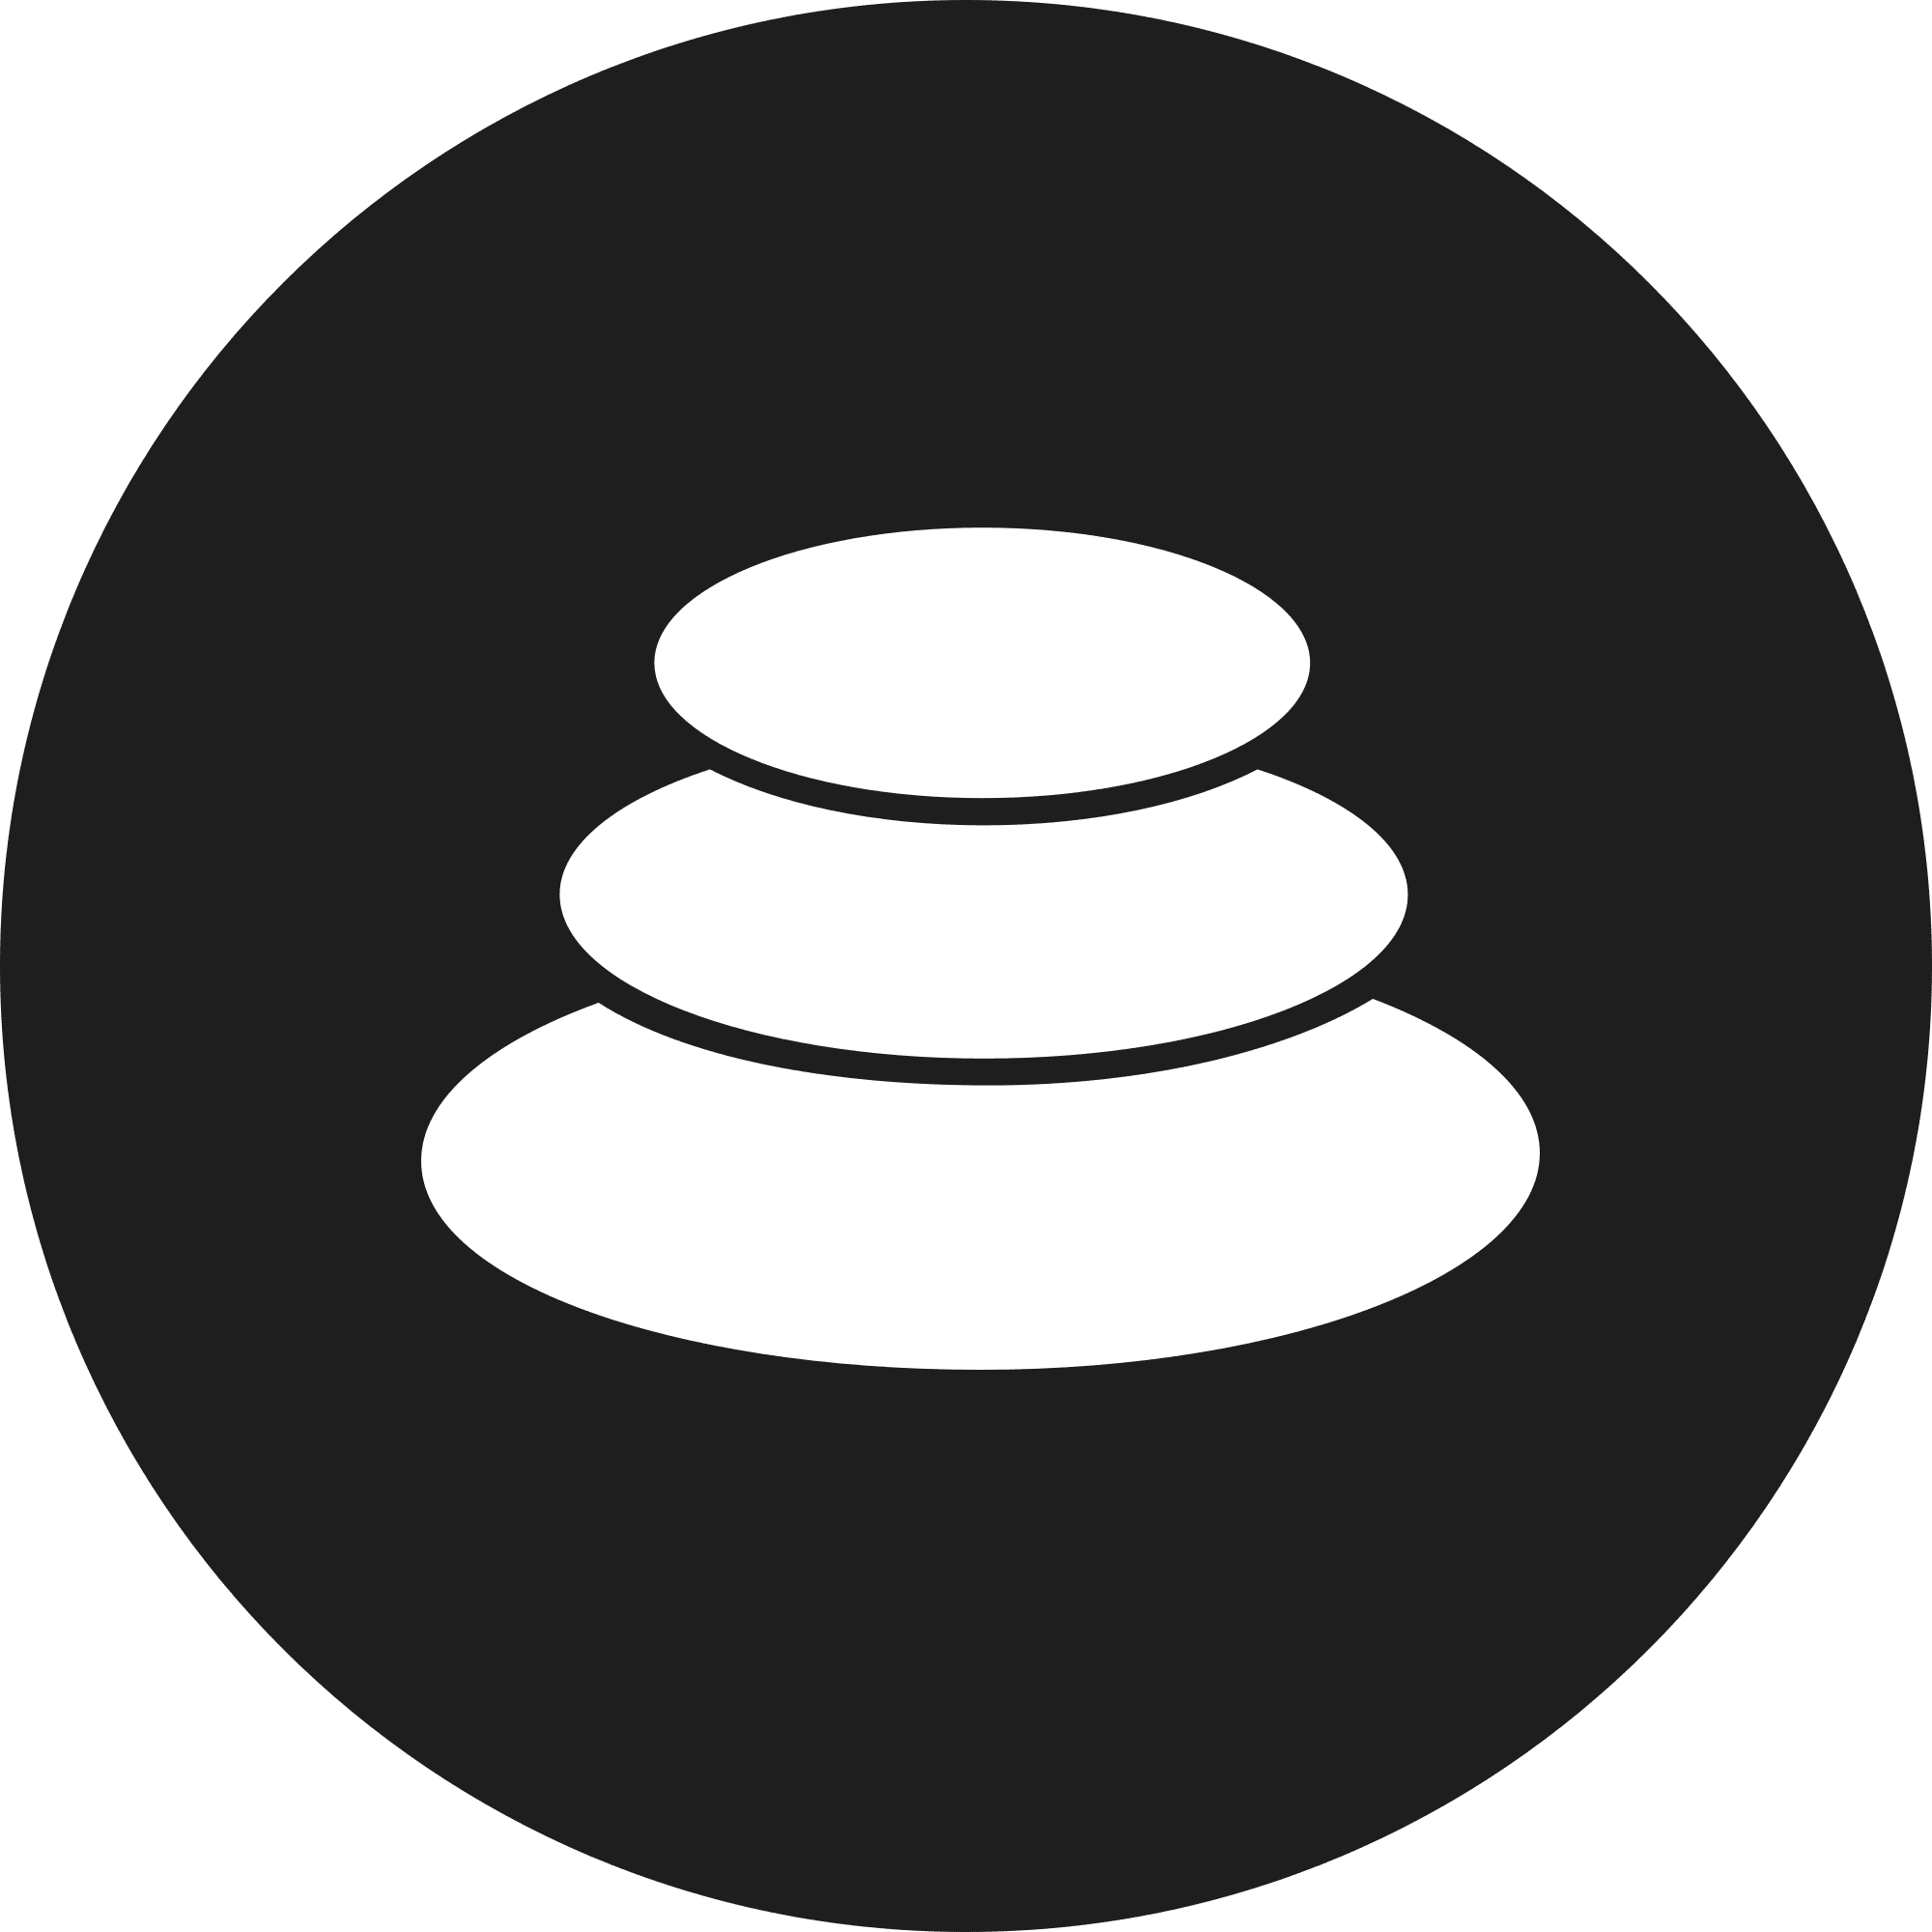 Balancer logo in png format